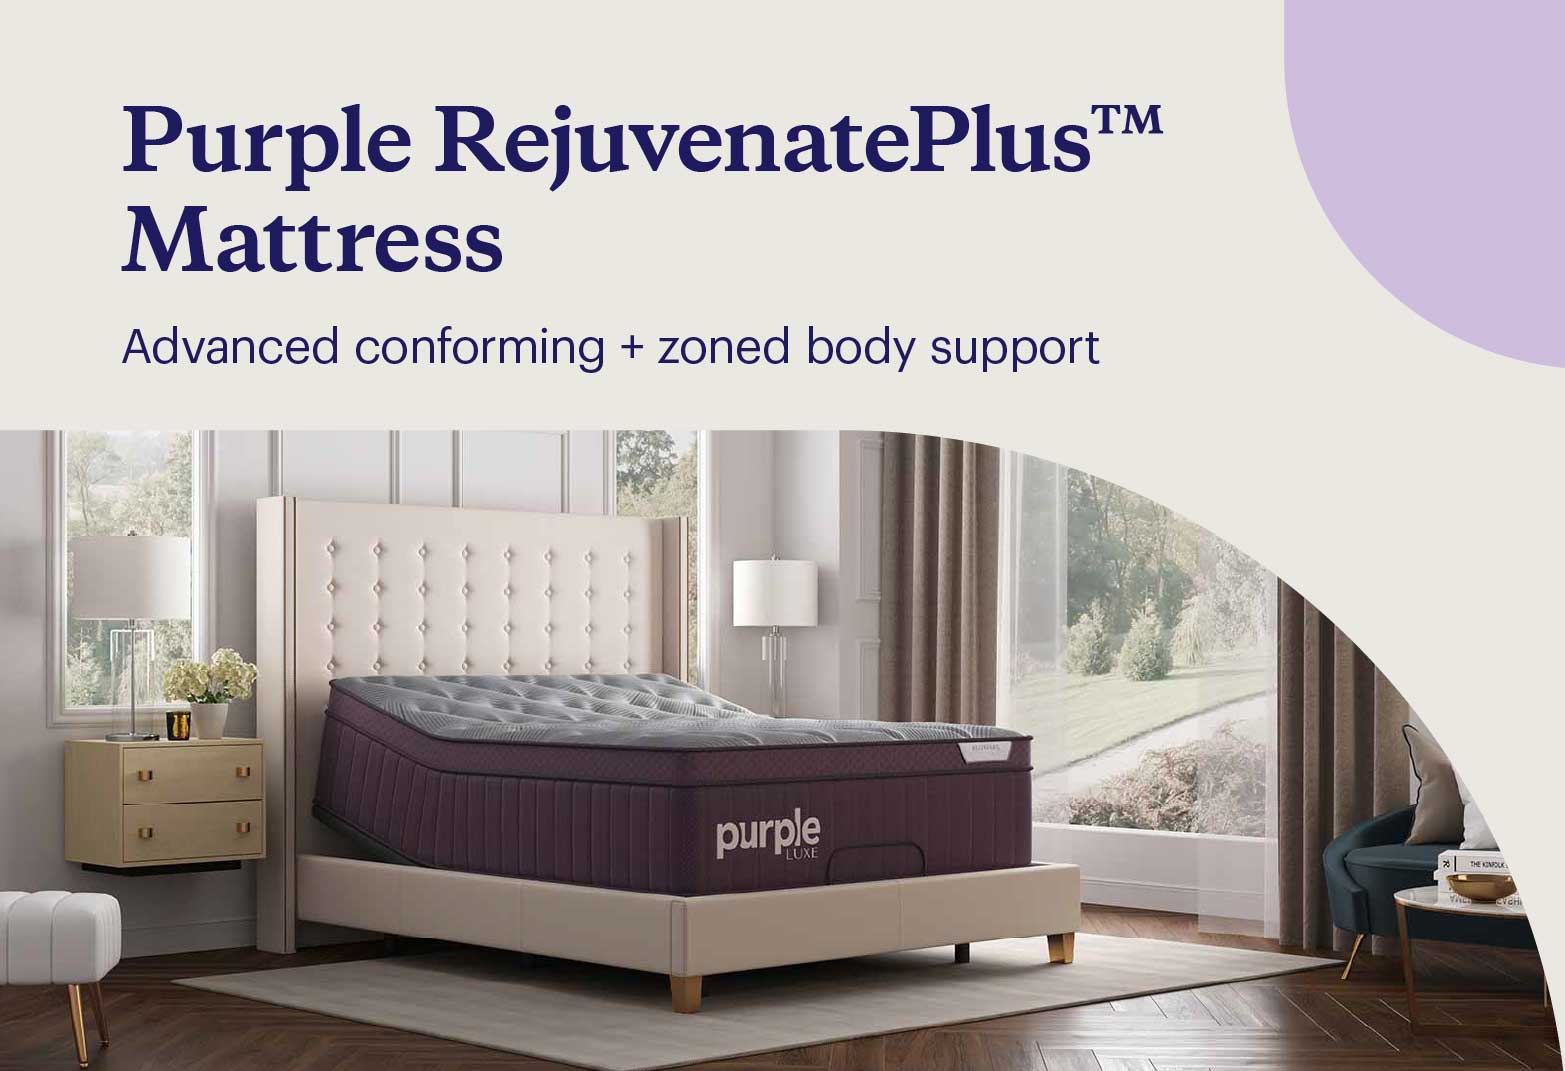 Purple’s RejuvenatePlus™ in a bright bedroom.